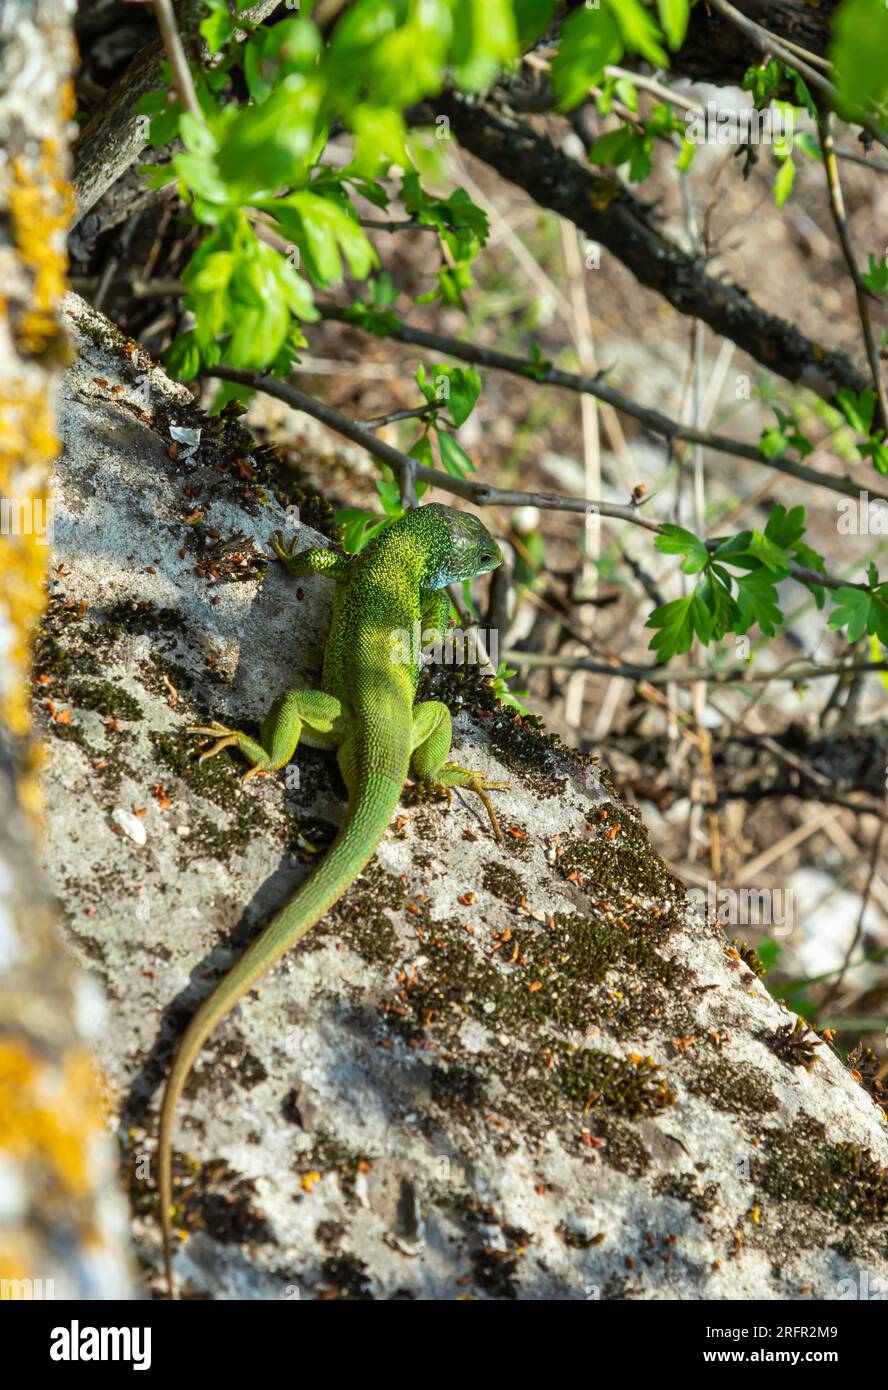 Lacerta viridis, Green and blue lizard with ticks, macro photo of a lizard, European green lizard. Stock Photo